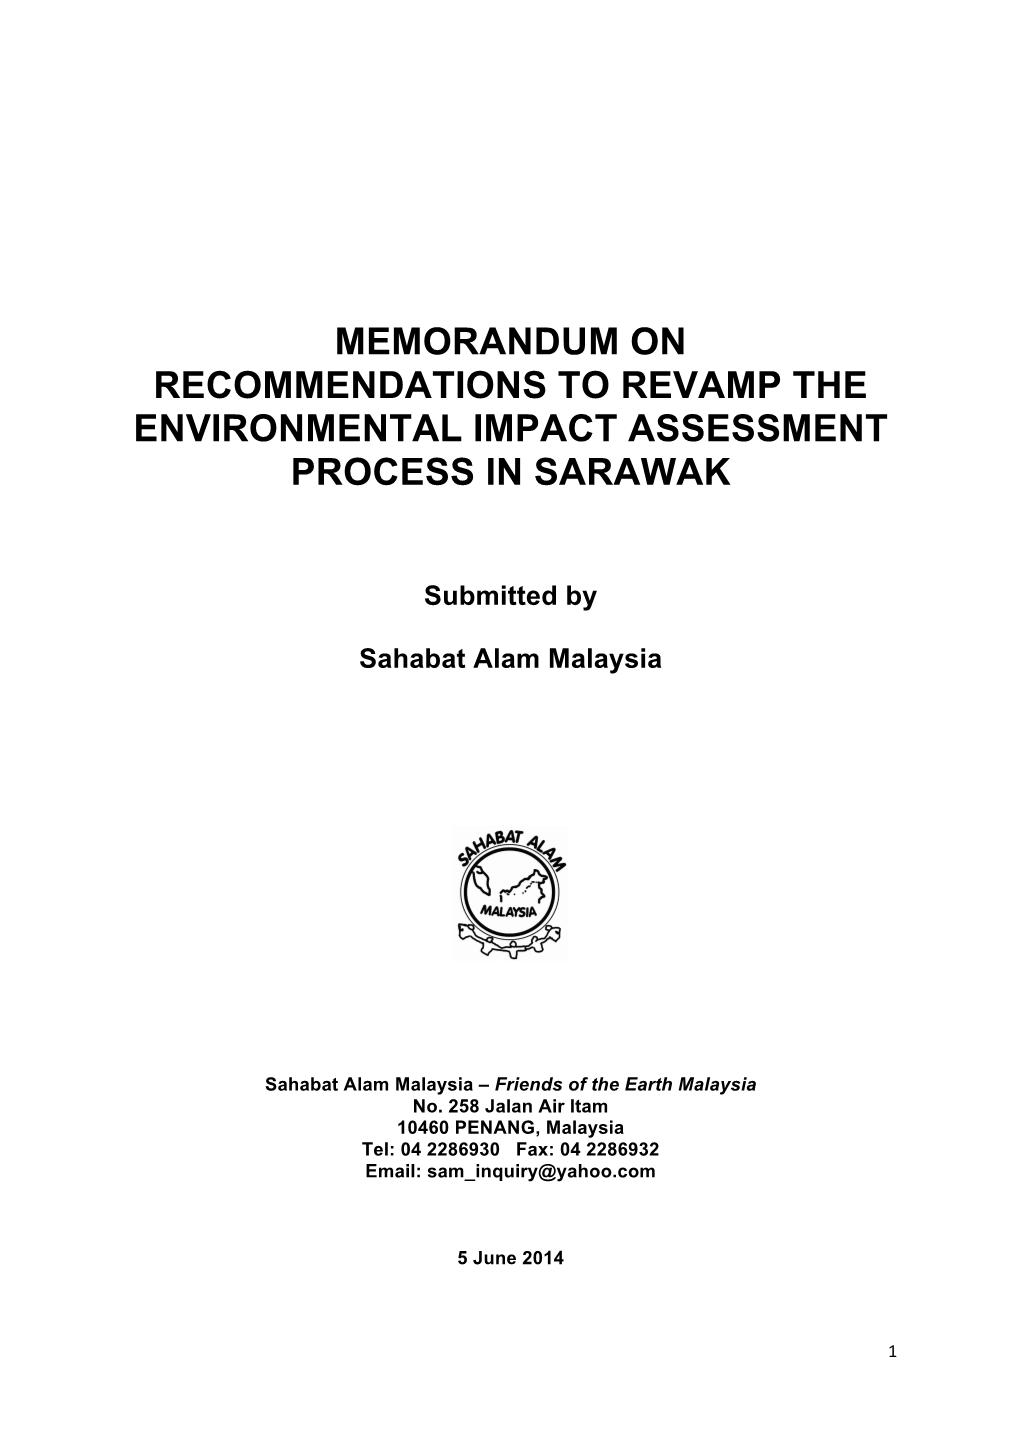 Memorandum on Recommendations to Revamp the Environmental Impact Assessment Process in Sarawak